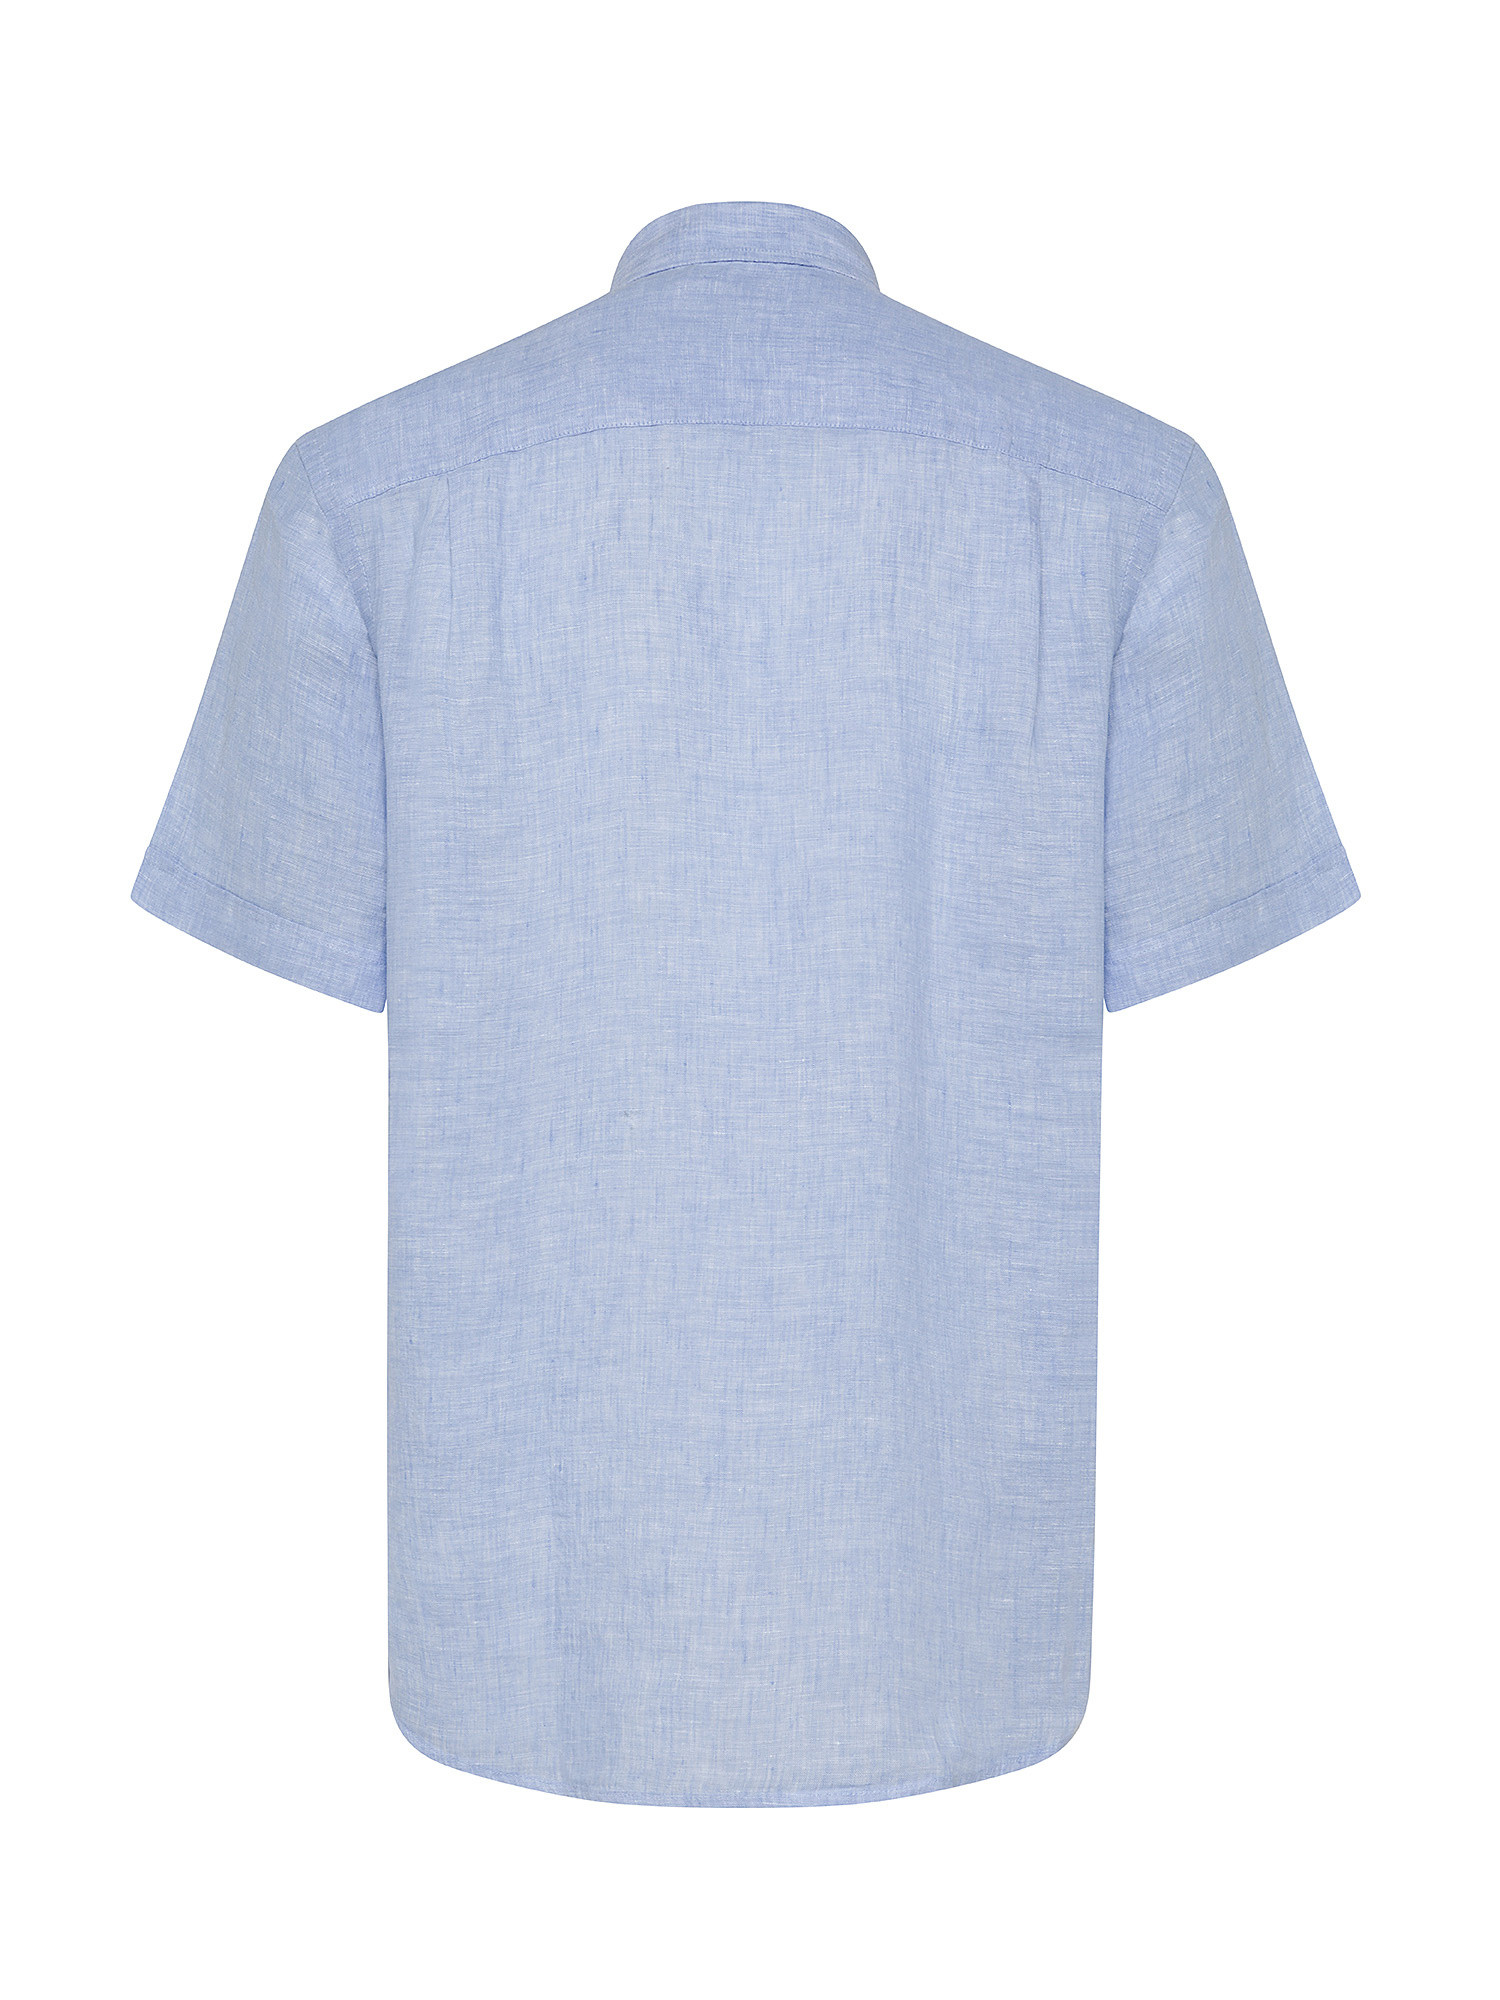 Luca D'Altieri - Regular fit shirt in pure linen, Light Blue, large image number 1